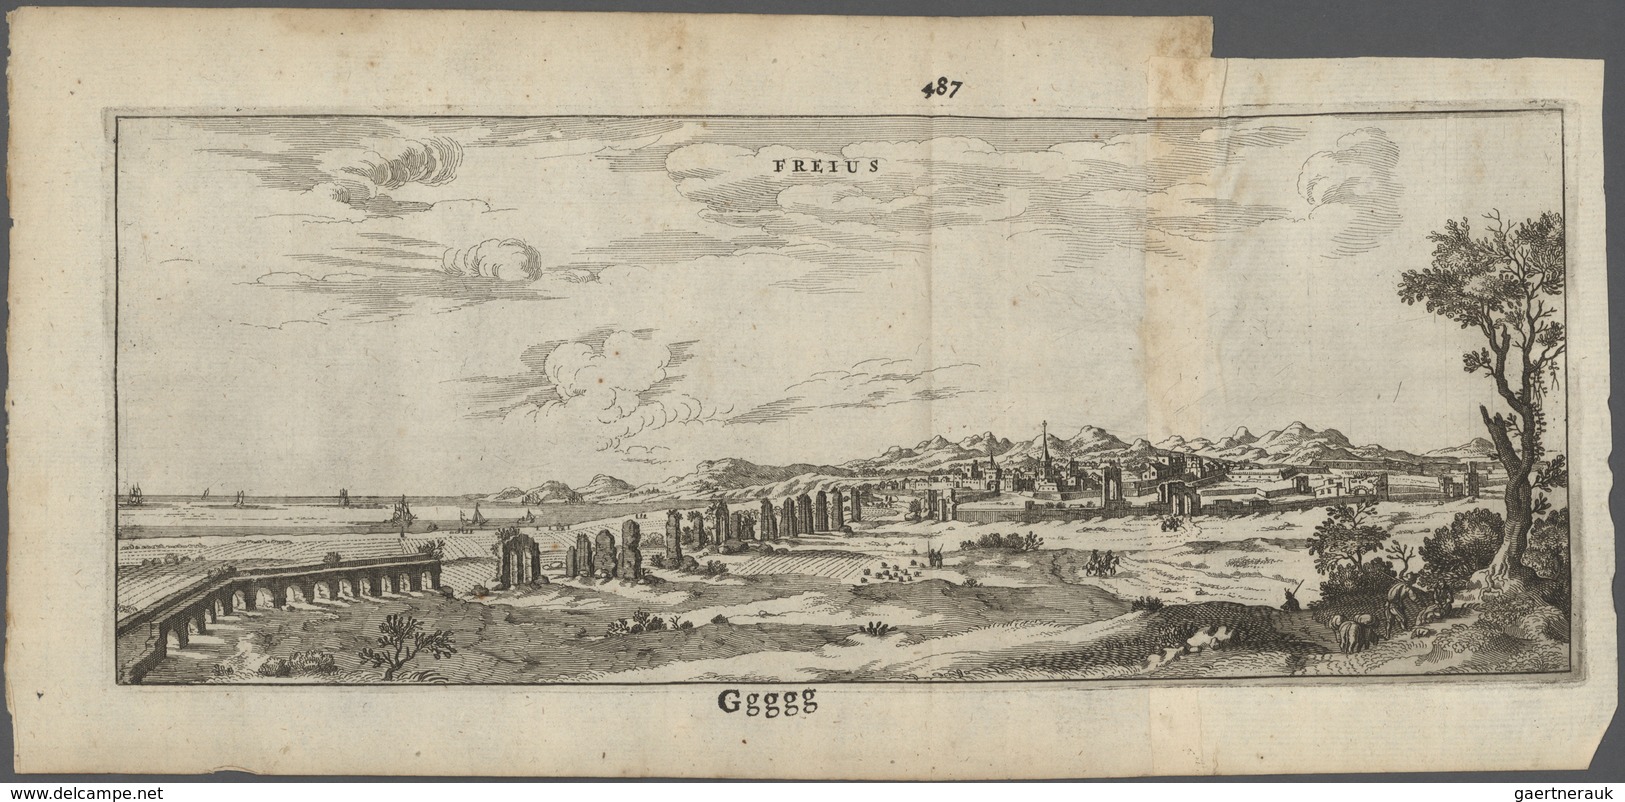 Landkarten Und Stiche: 1679 (ca). Original Frejus City Bird's-eye Map From The 1679 Dutch Produced A - Geografia